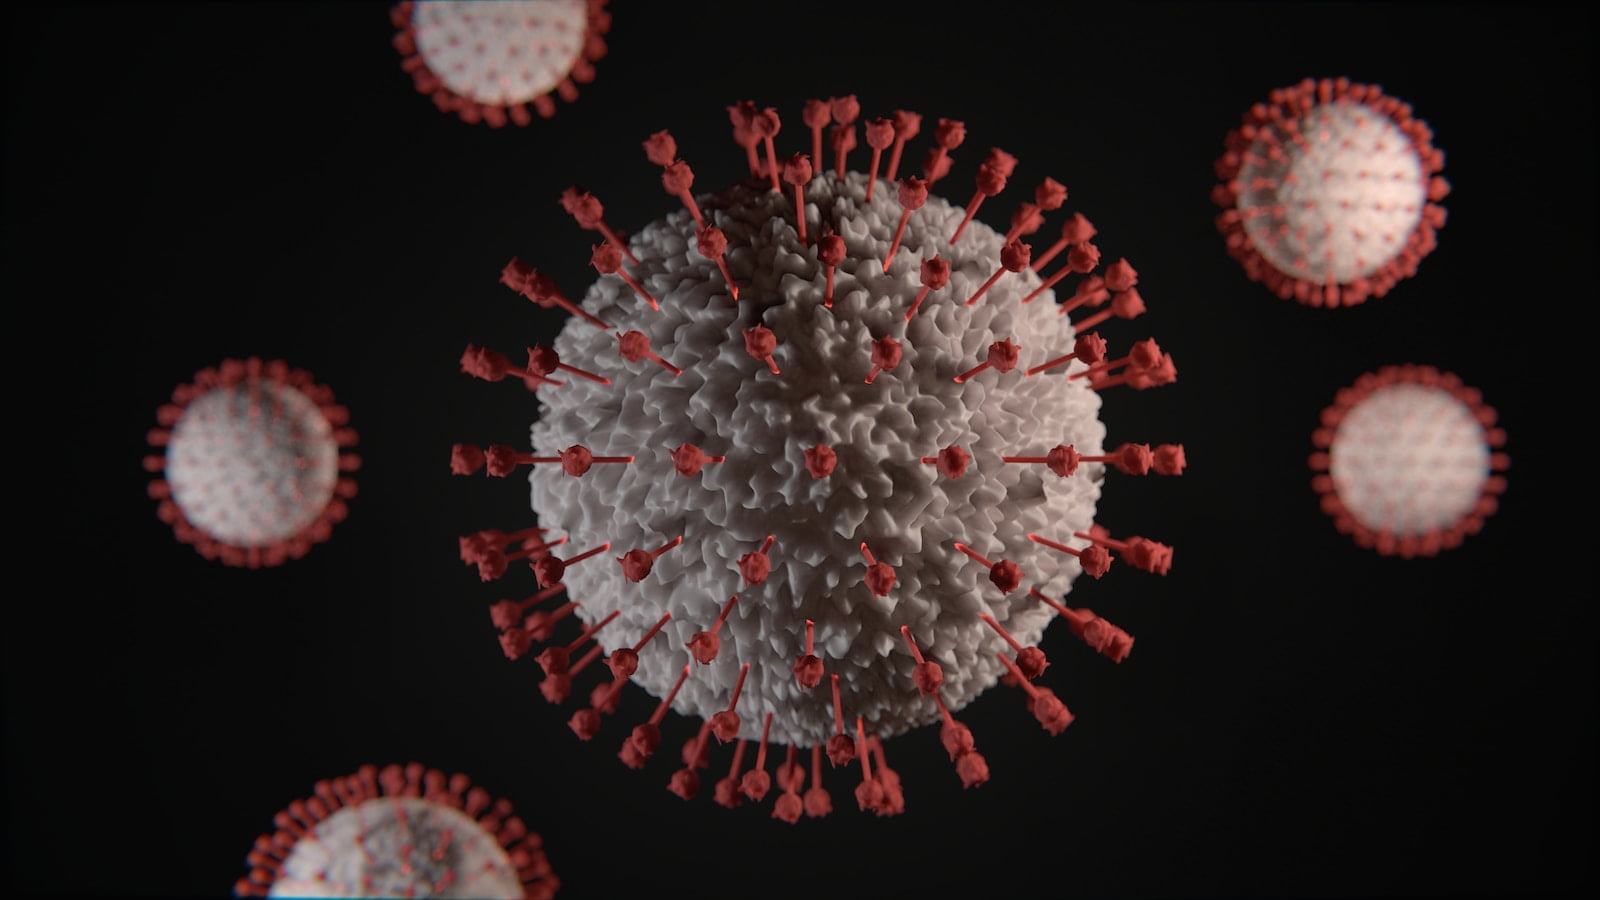 Disease X: The Next Pandemic?